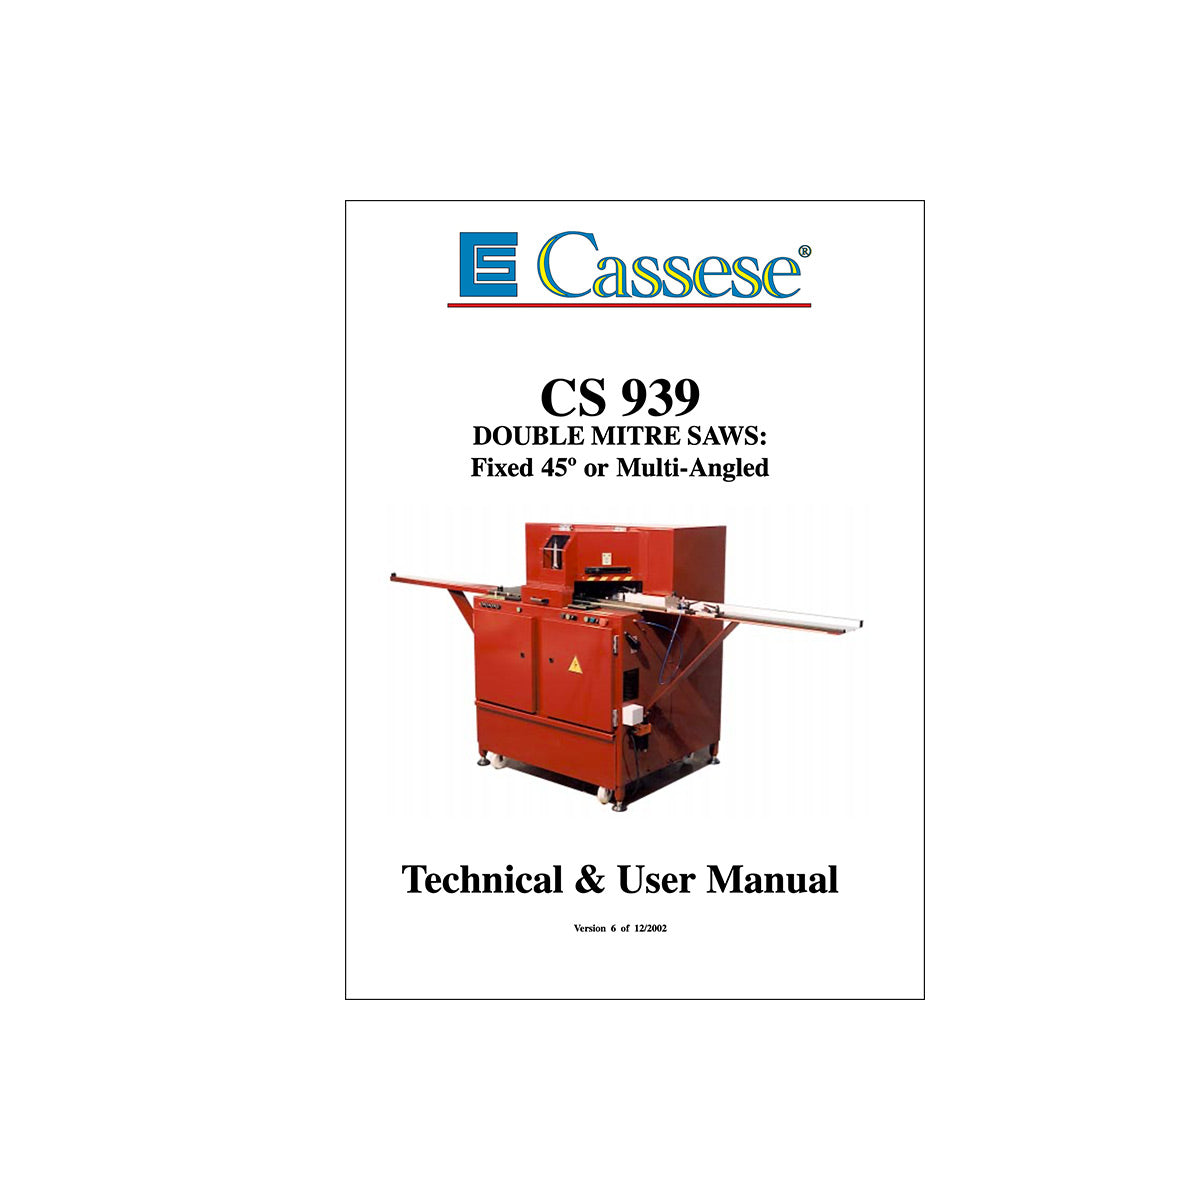 Cassese cs939 - Underpinner Spares